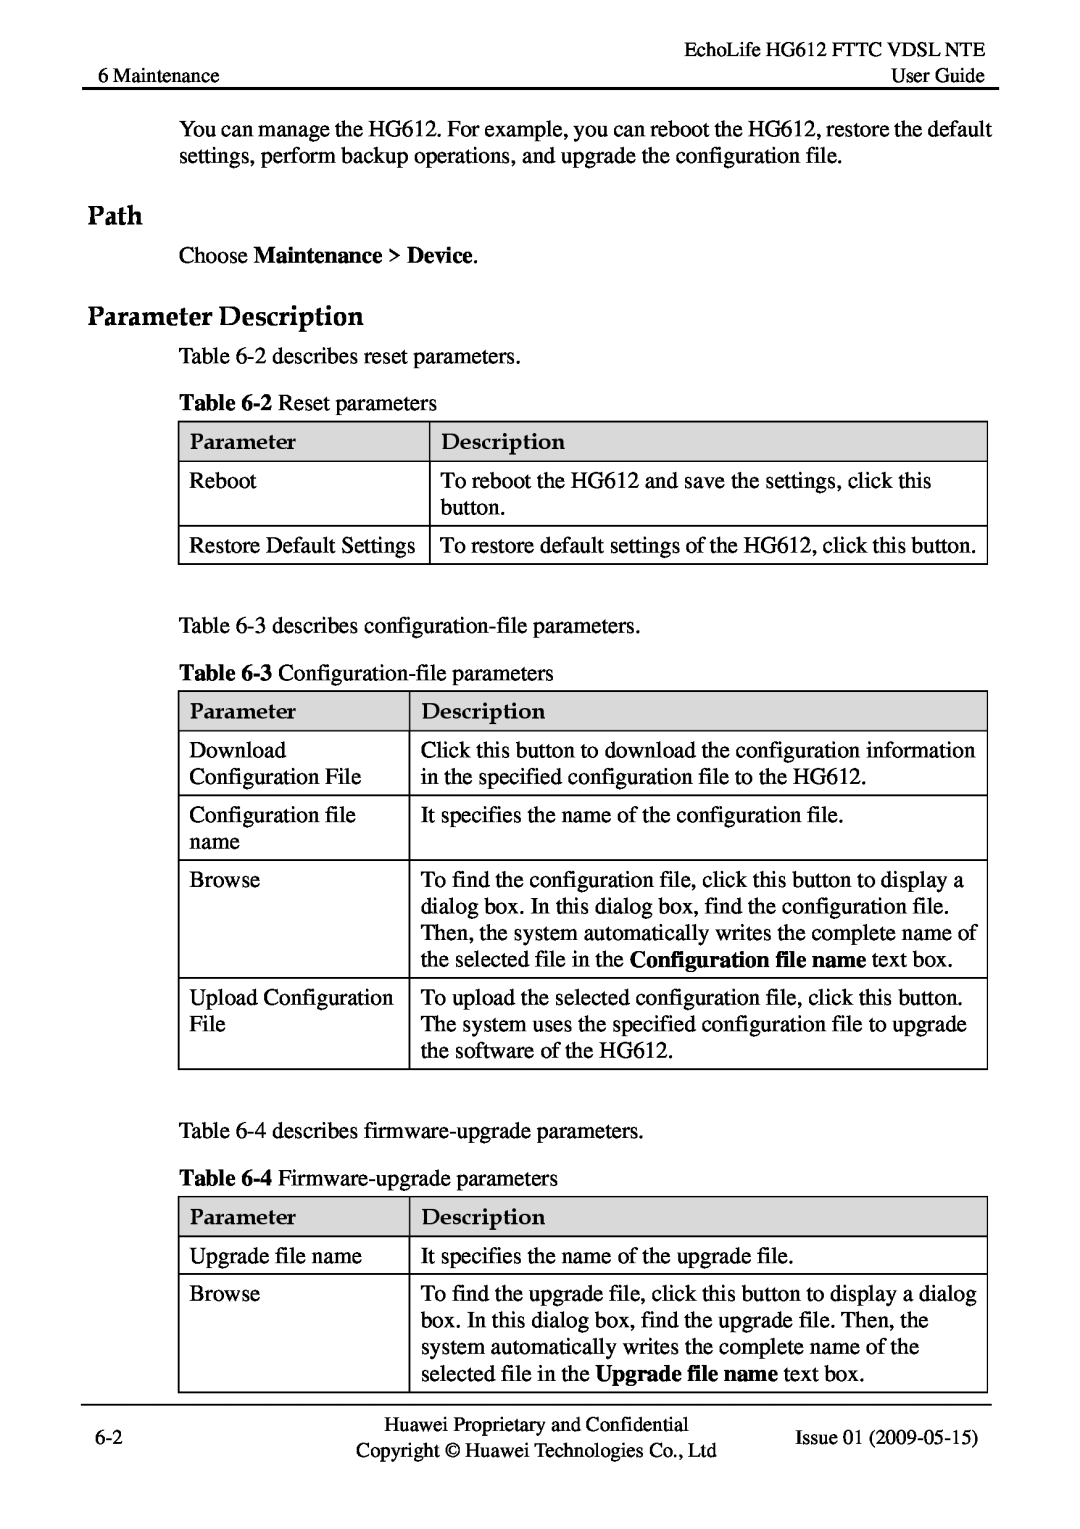 Huawei HG612FTTC VDSL NTE manual Path, Parameter Description, Choose Maintenance Device 